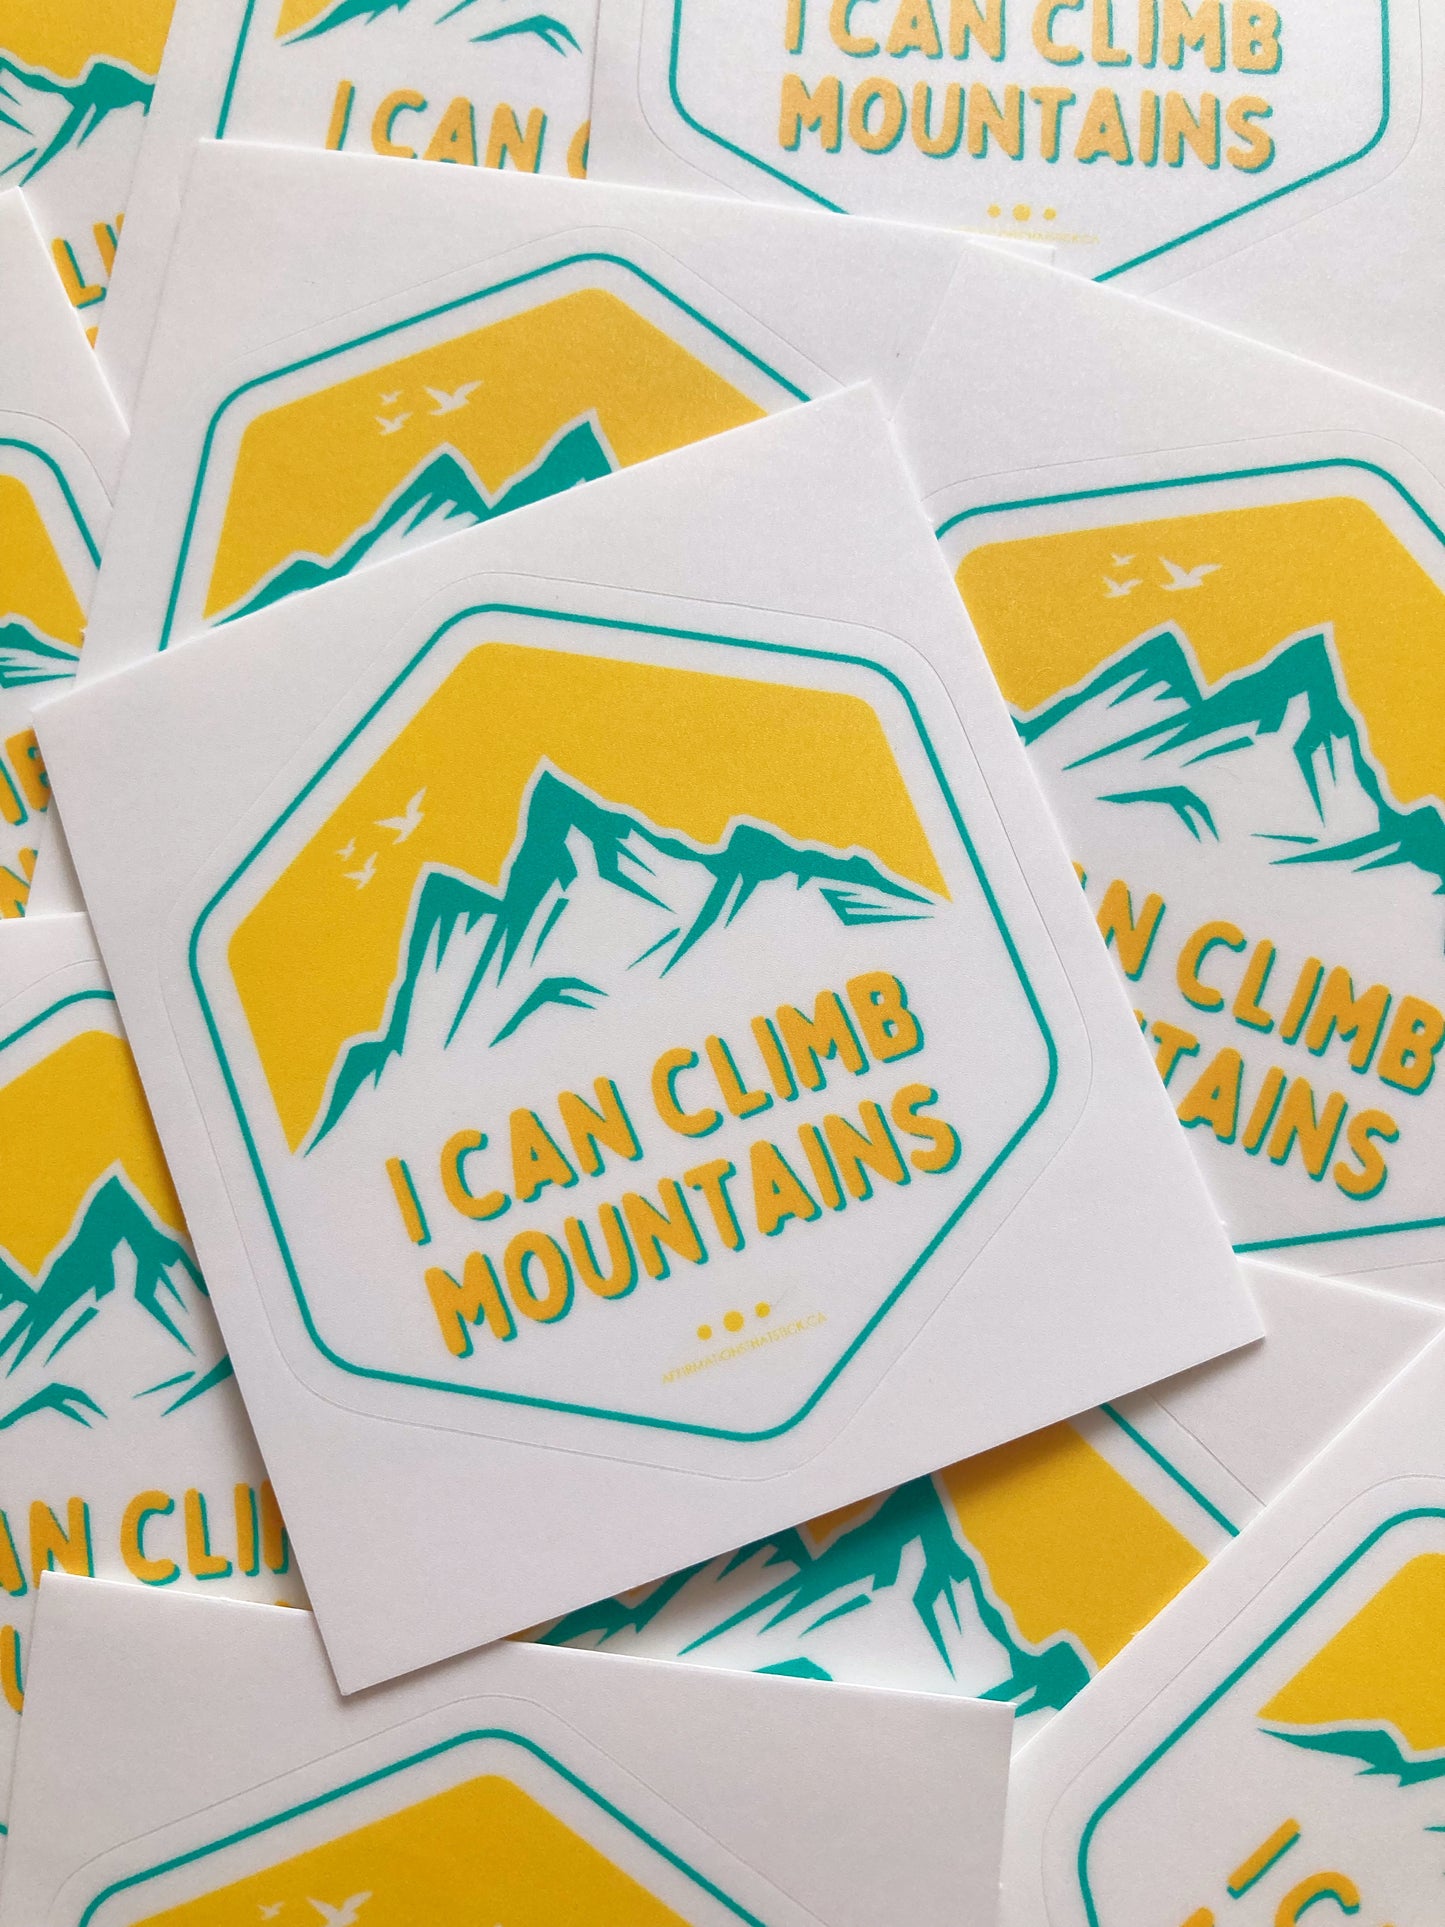 Climb Mountains Affirmation Sticker-Affirmations That Stick CA